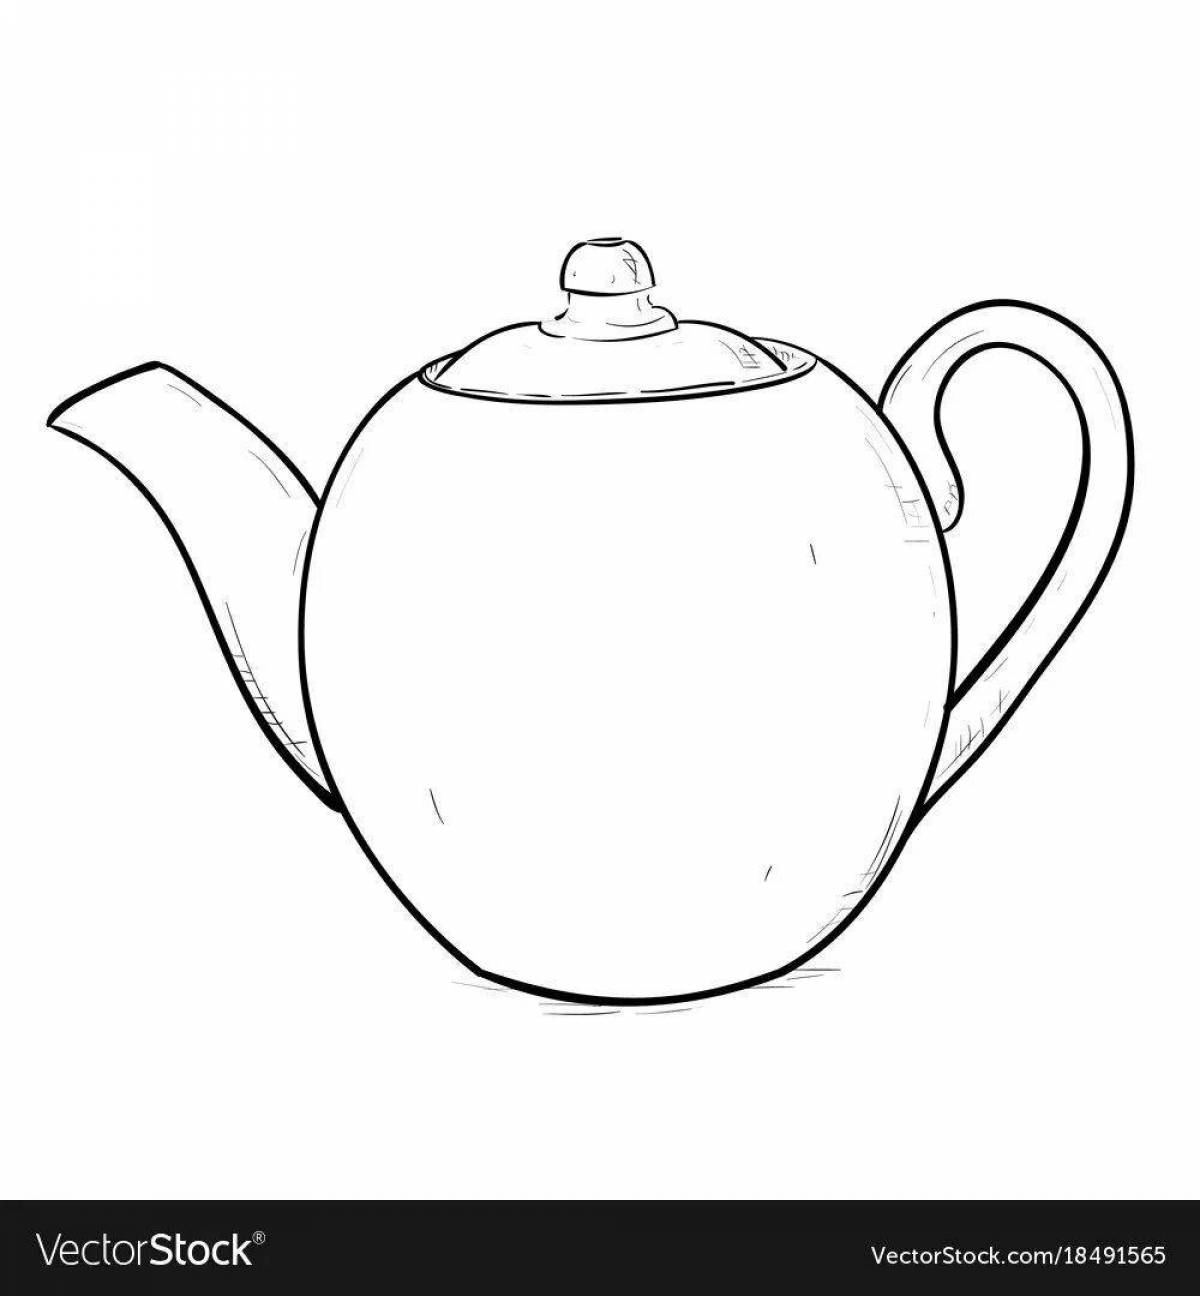 Coloring page happy teapot and mug